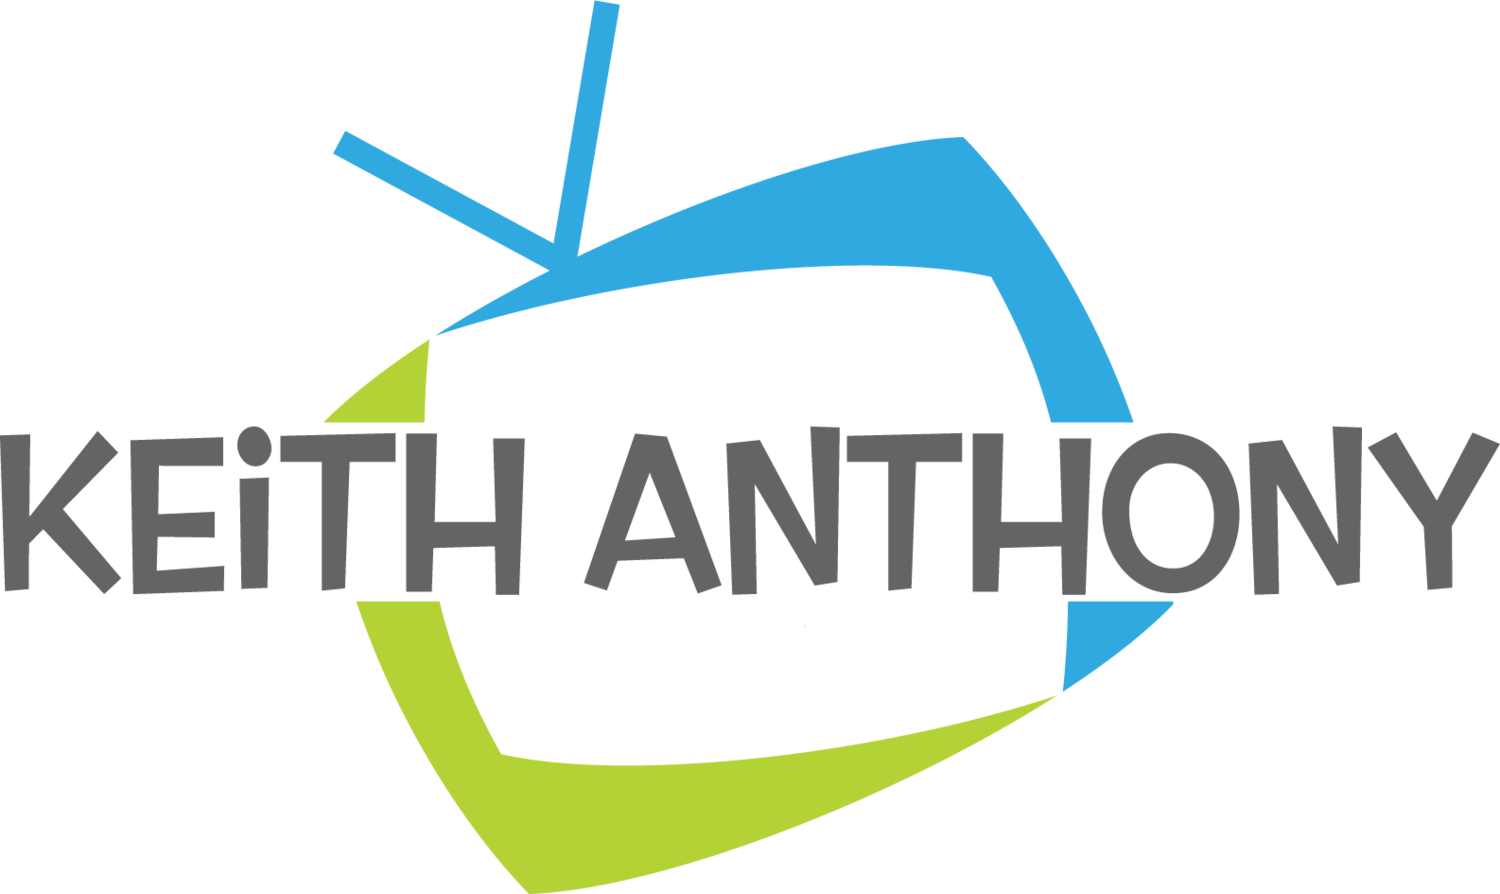 Keith Anthony TV